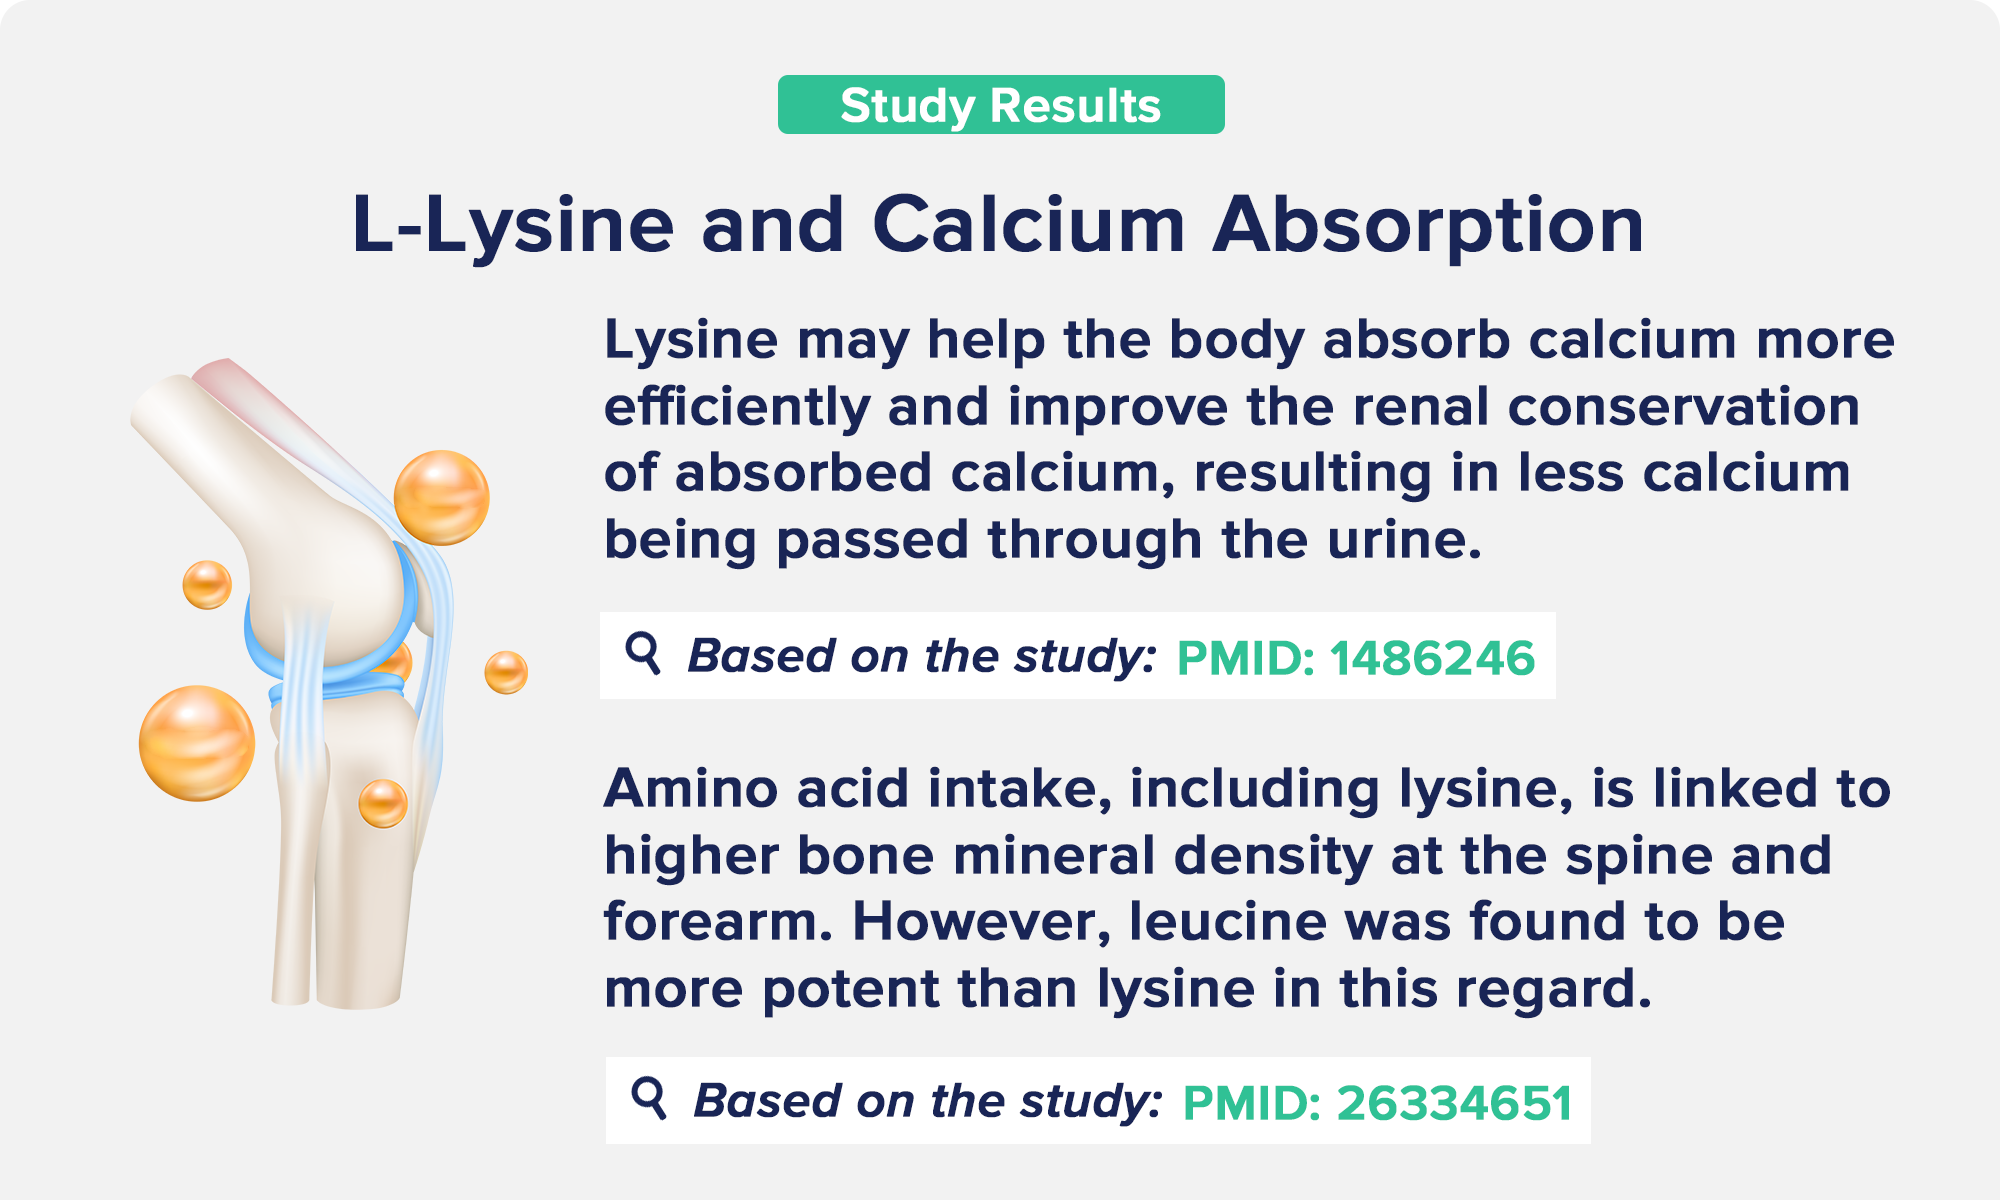 L-Lysine and Calcium Absorption